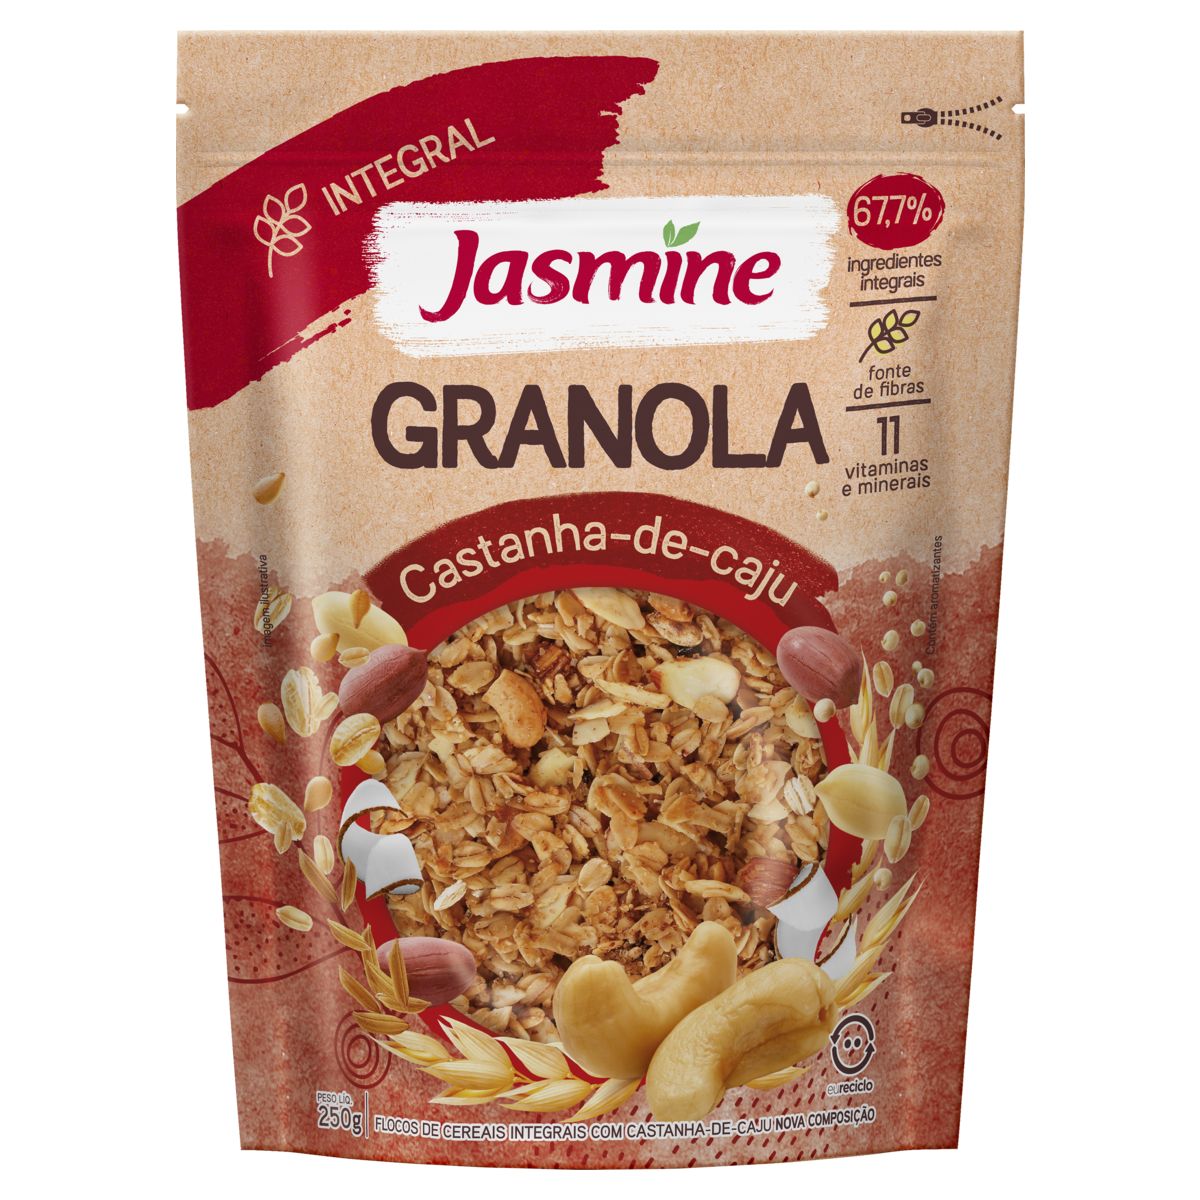 Granola Jasmine Castanha-de-Caju 67,7% Integral 250g